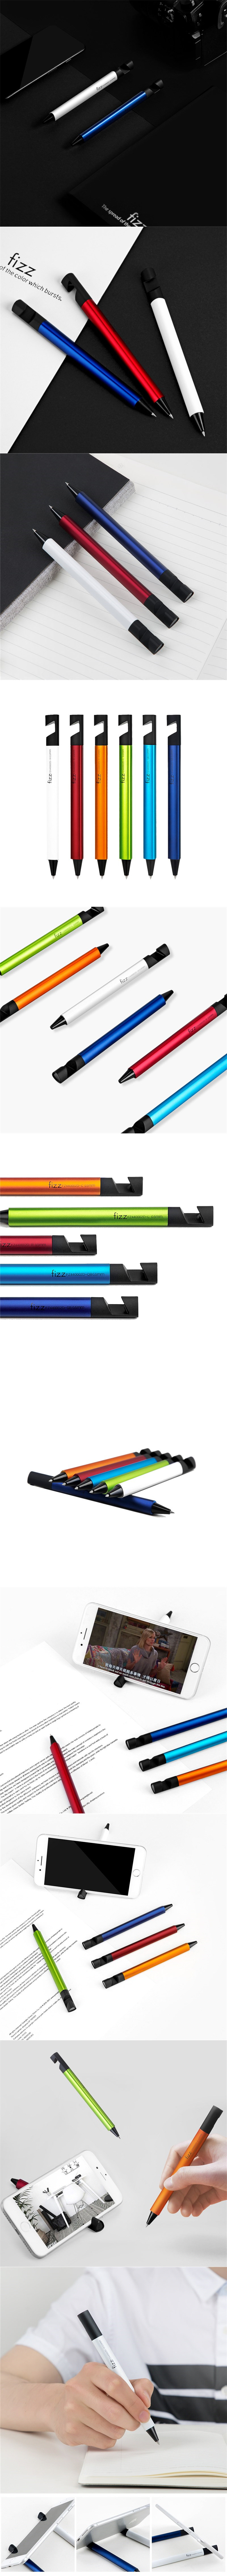 XIAOMI Fizz 1PC Multifunctional 2 In 1 Gel Pen & Mobile Phone Holder 0.5mm Rotating Gel Pen Black Ink Writing Pens